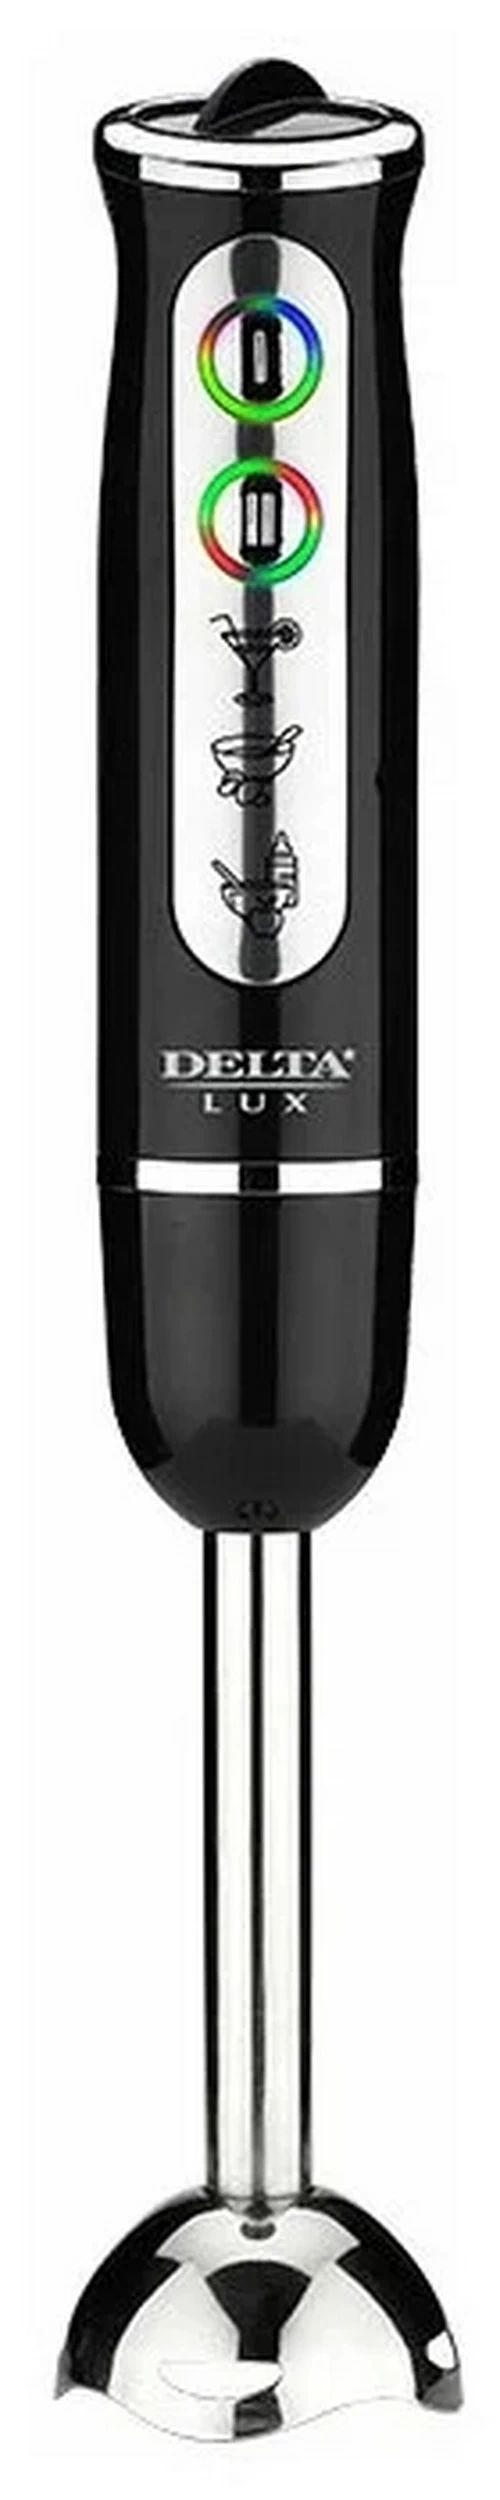 Погружной блендер Delta Lux DL-7039 черный погружной блендер delta dl 7013 orange